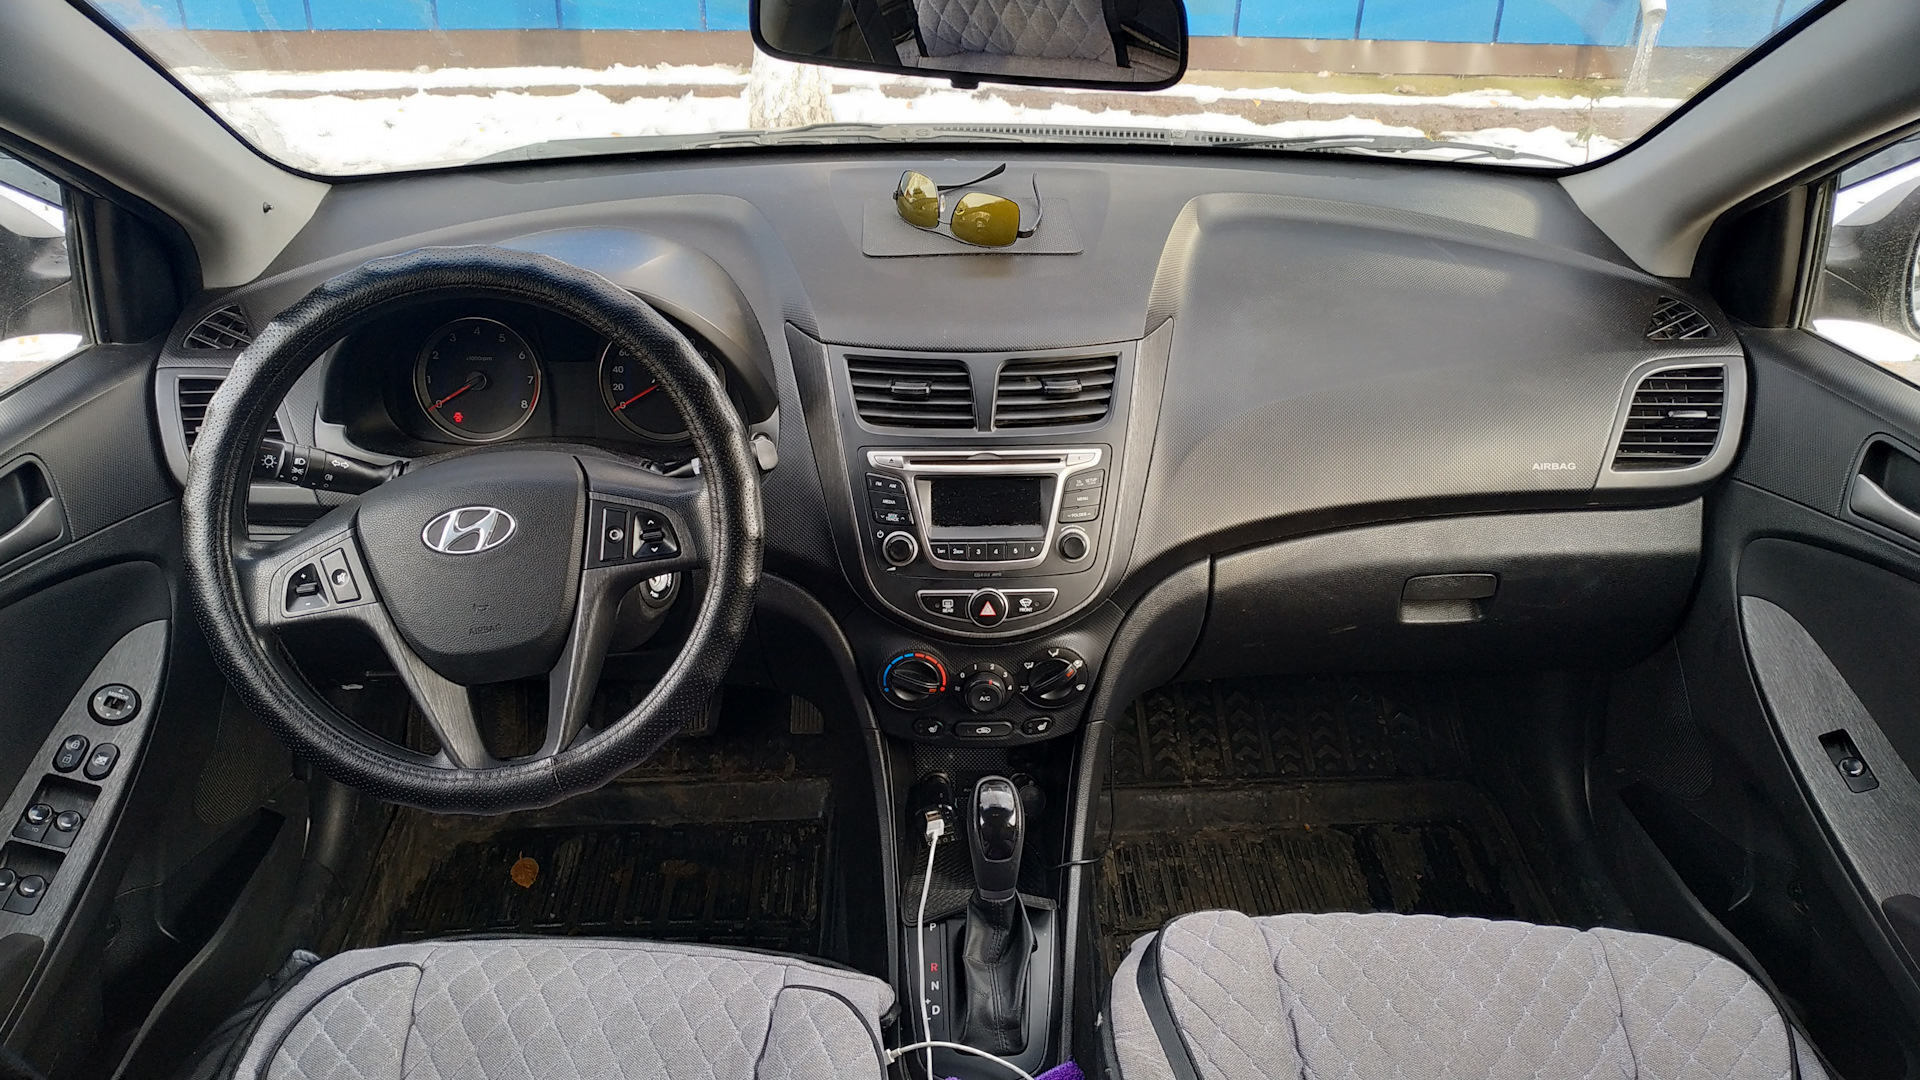        Hyundai Solaris 16   2014     DRIVE2